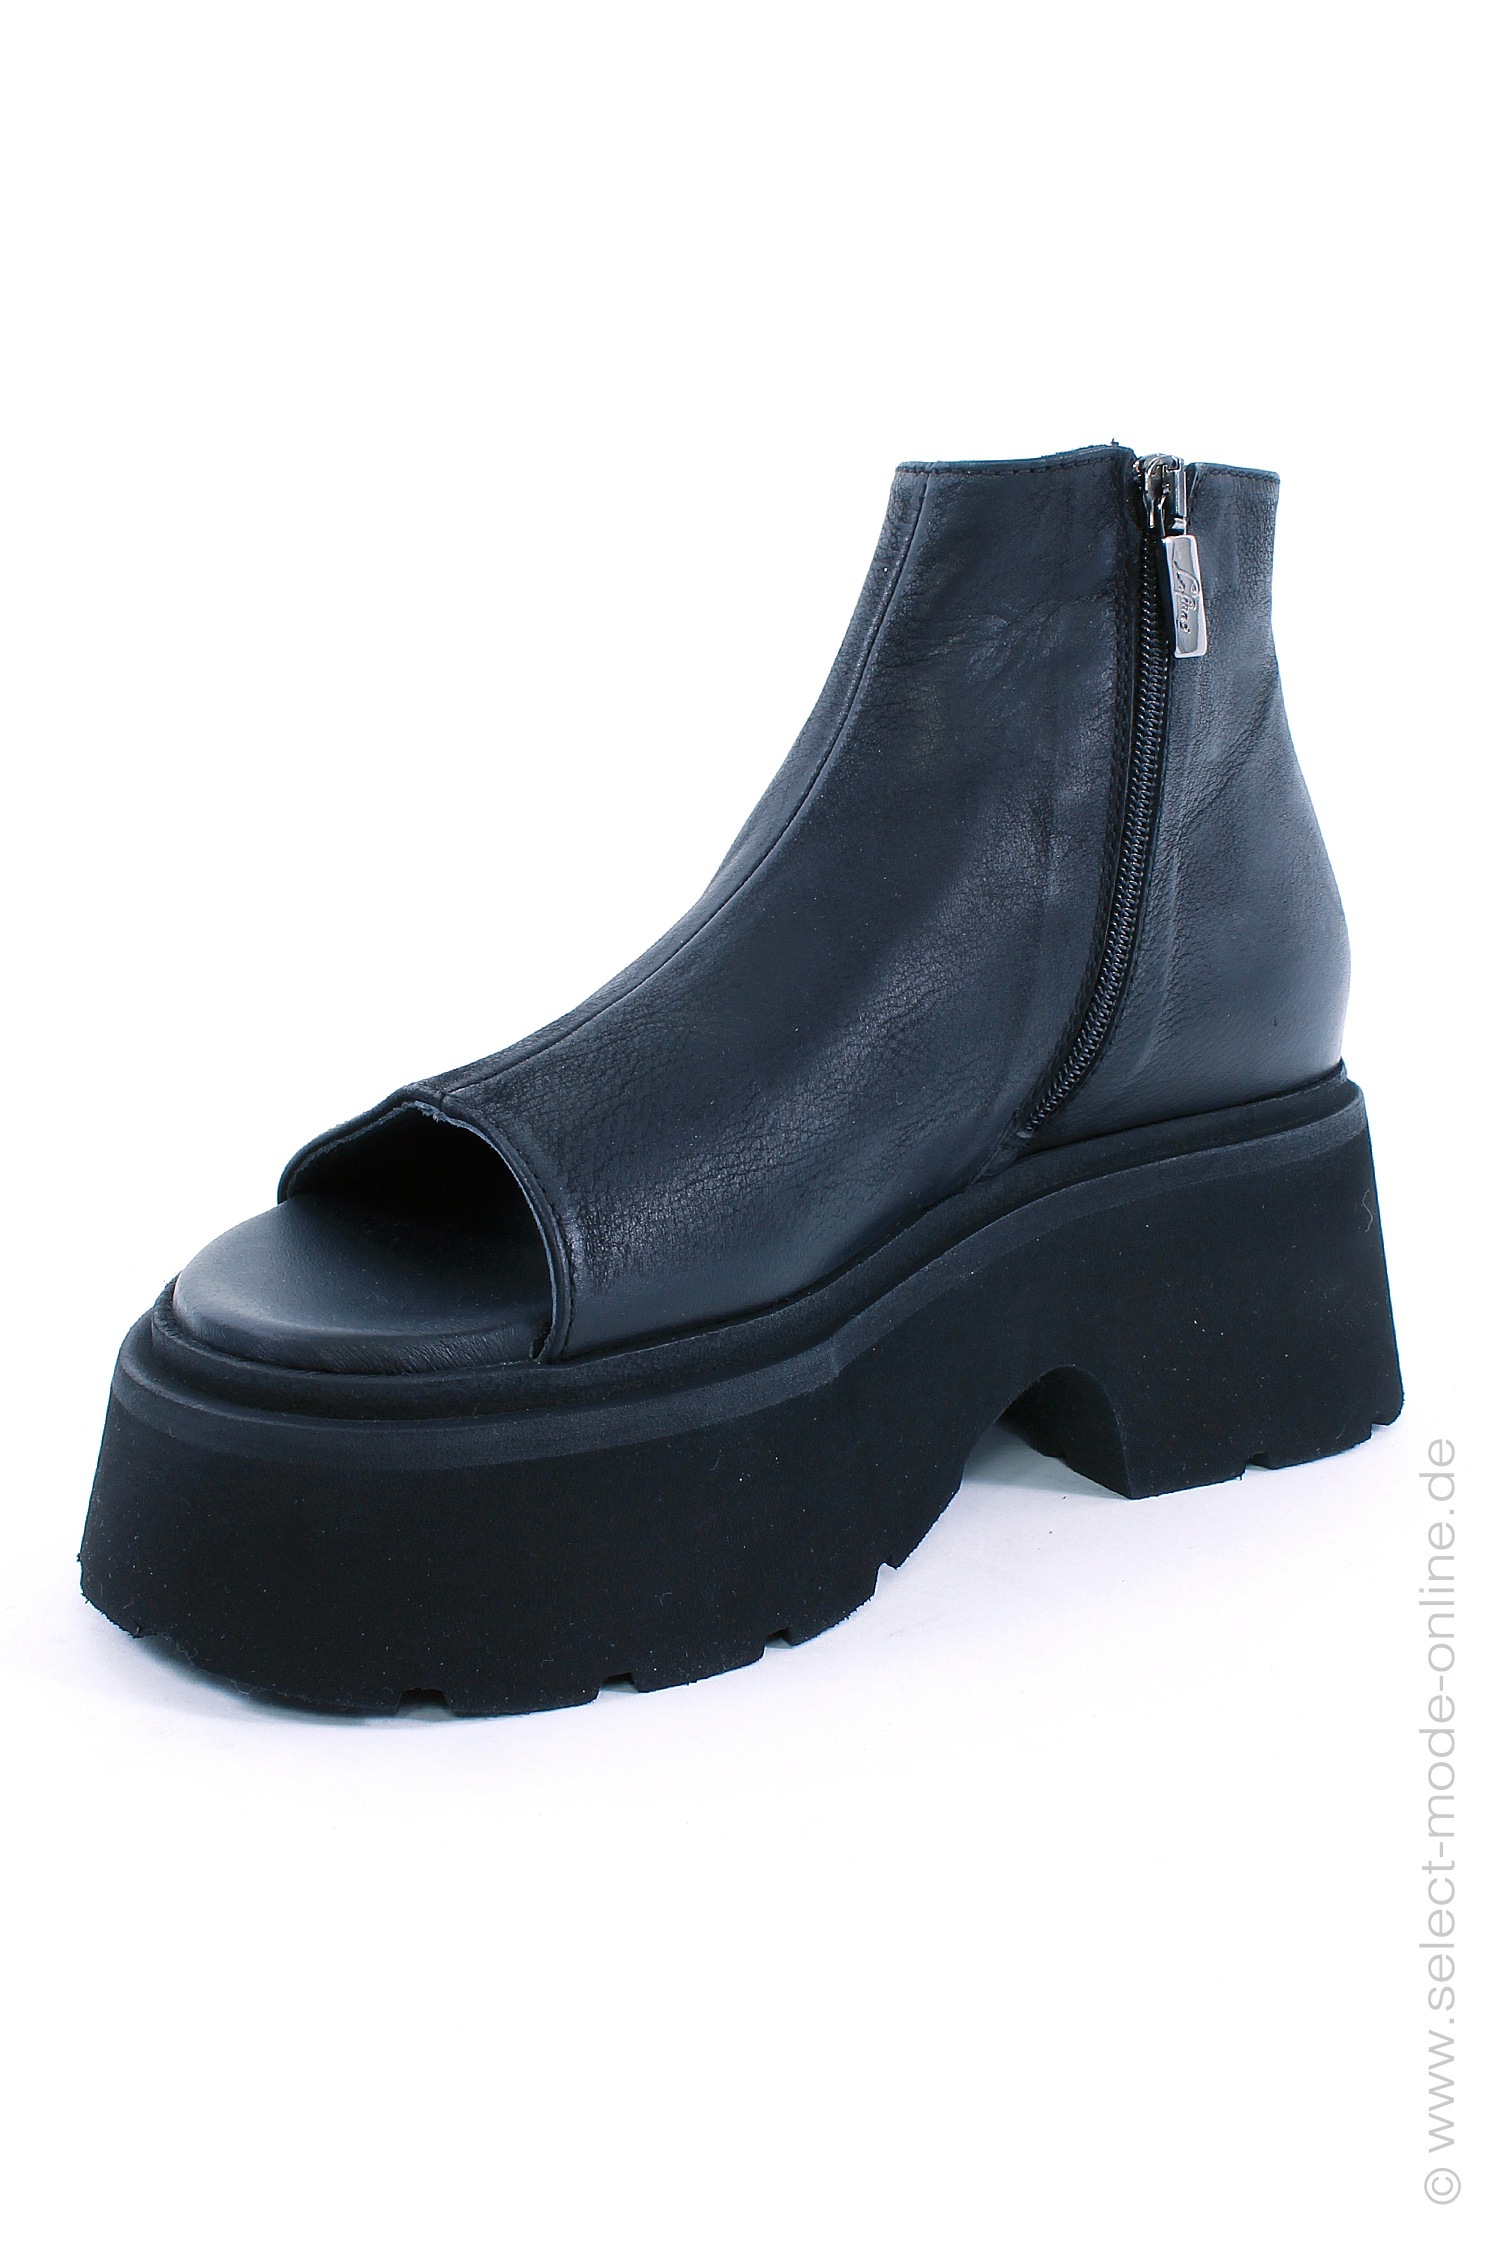 Sandals - black - 3460